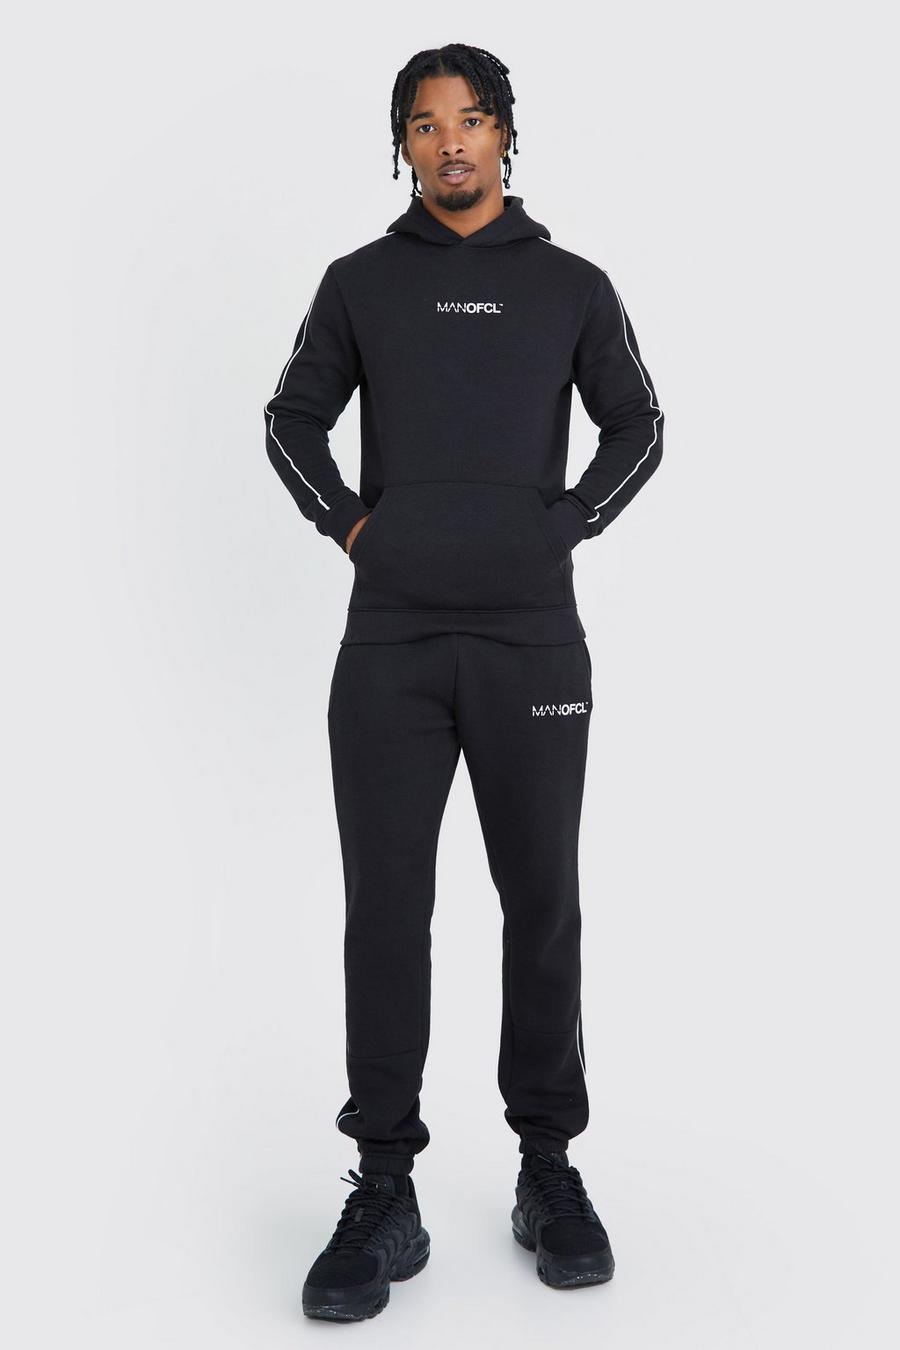 Ofcl Man Muscle-Fit Trainingsanzug mit Kapuze, Black